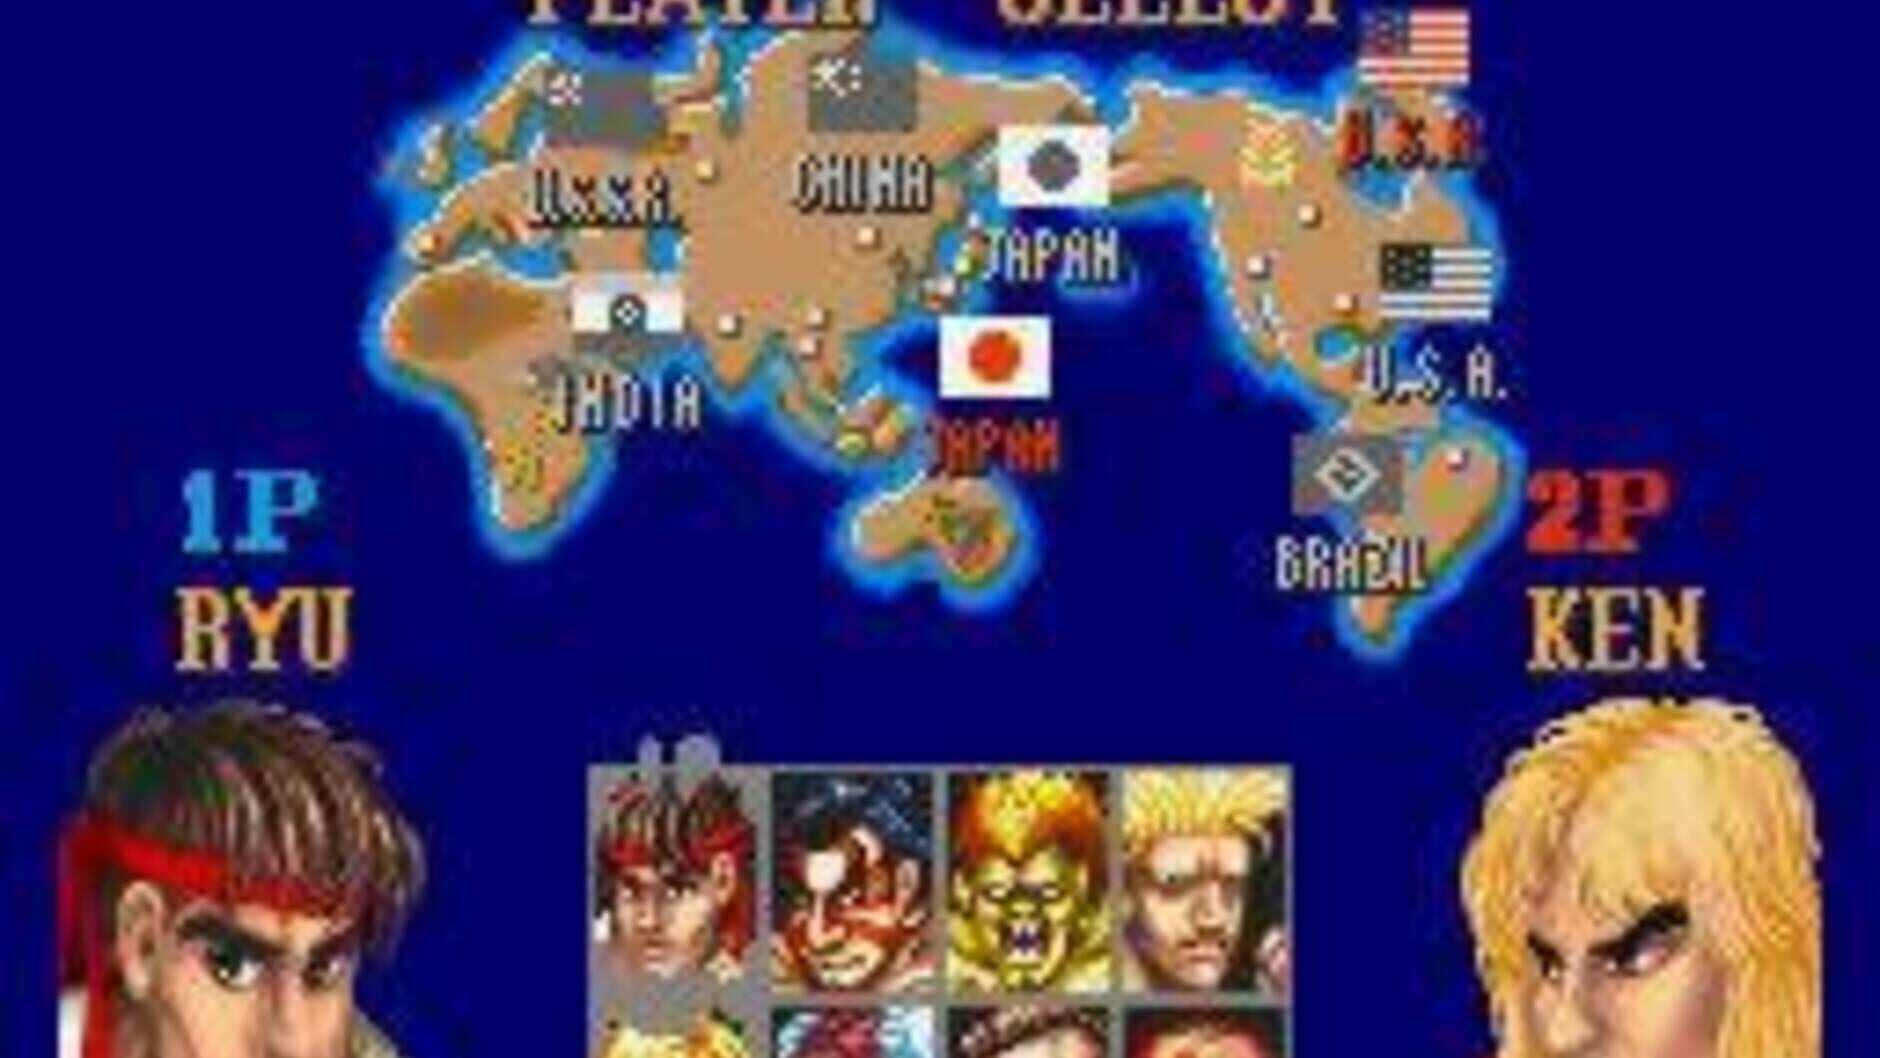 Screenshot for Street Fighter II